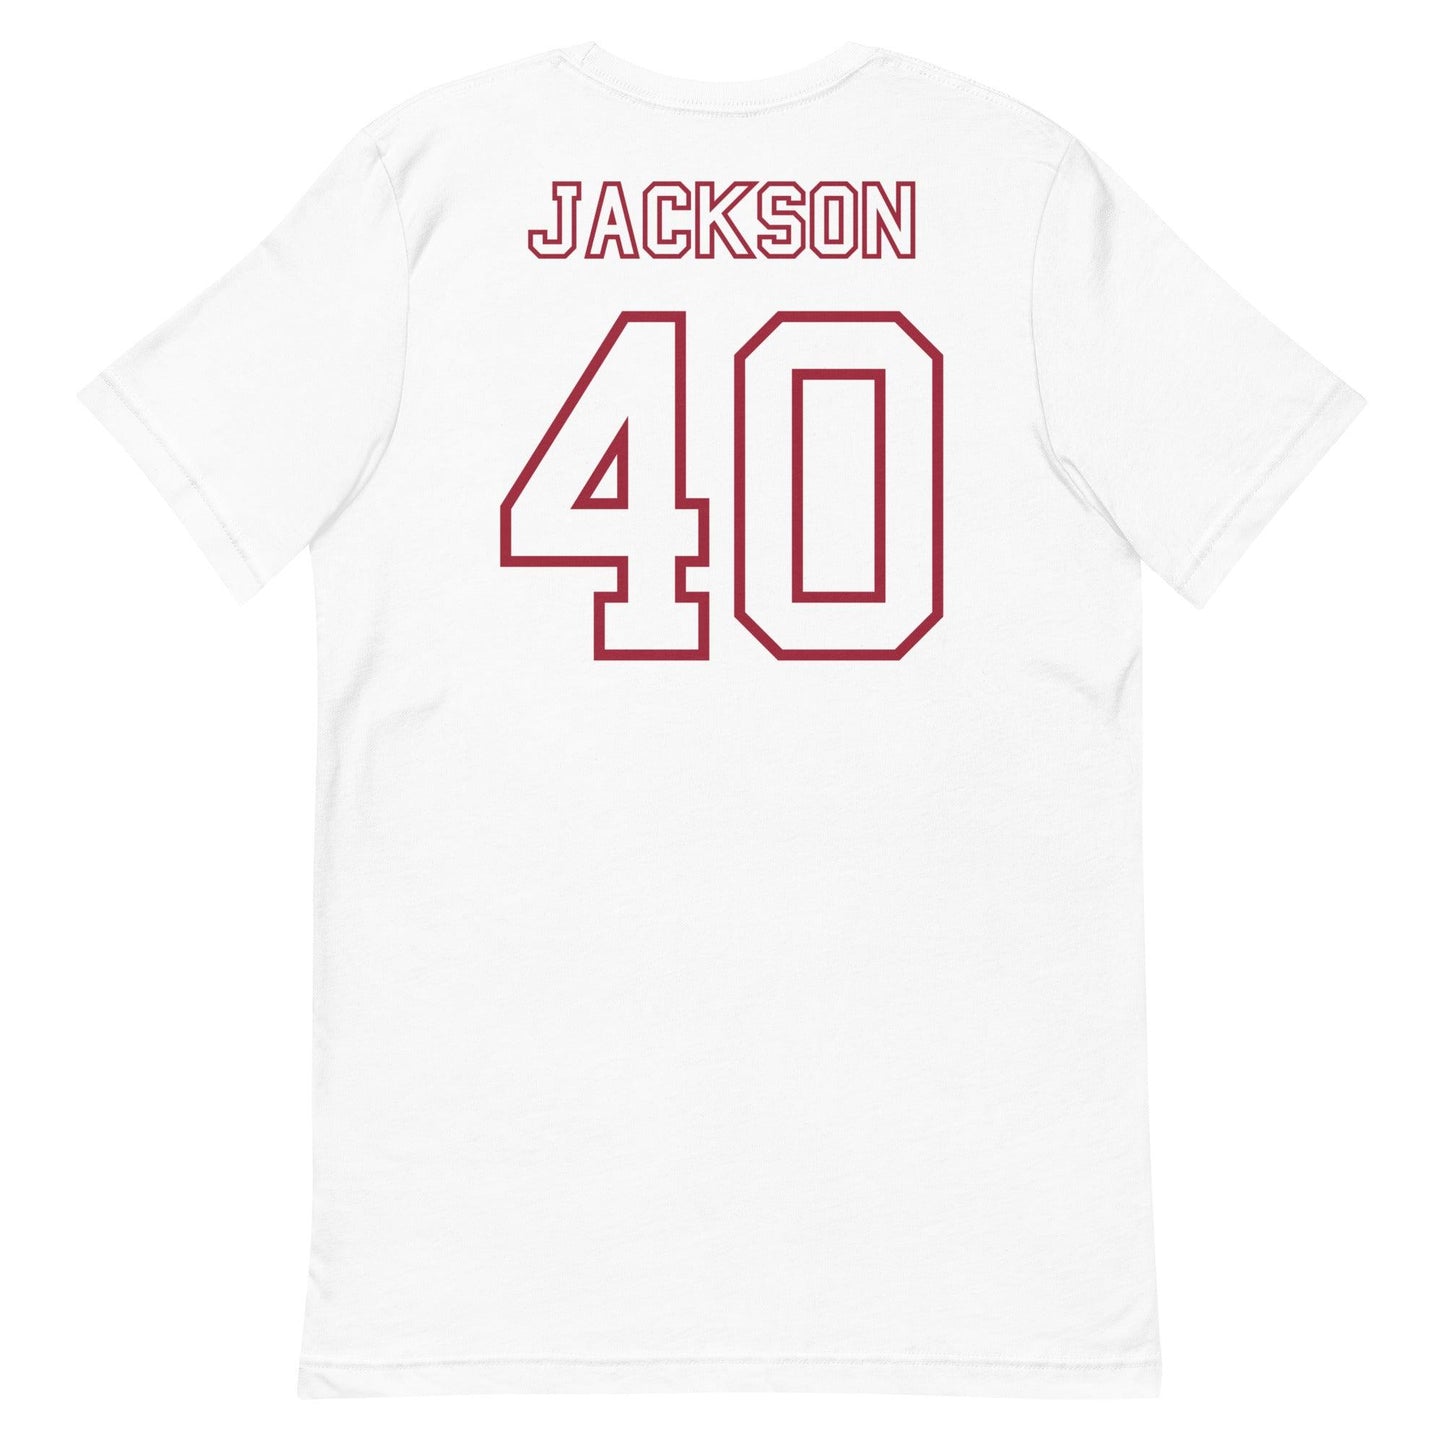 Landon Jackson "Jersey" t-shirt - Fan Arch